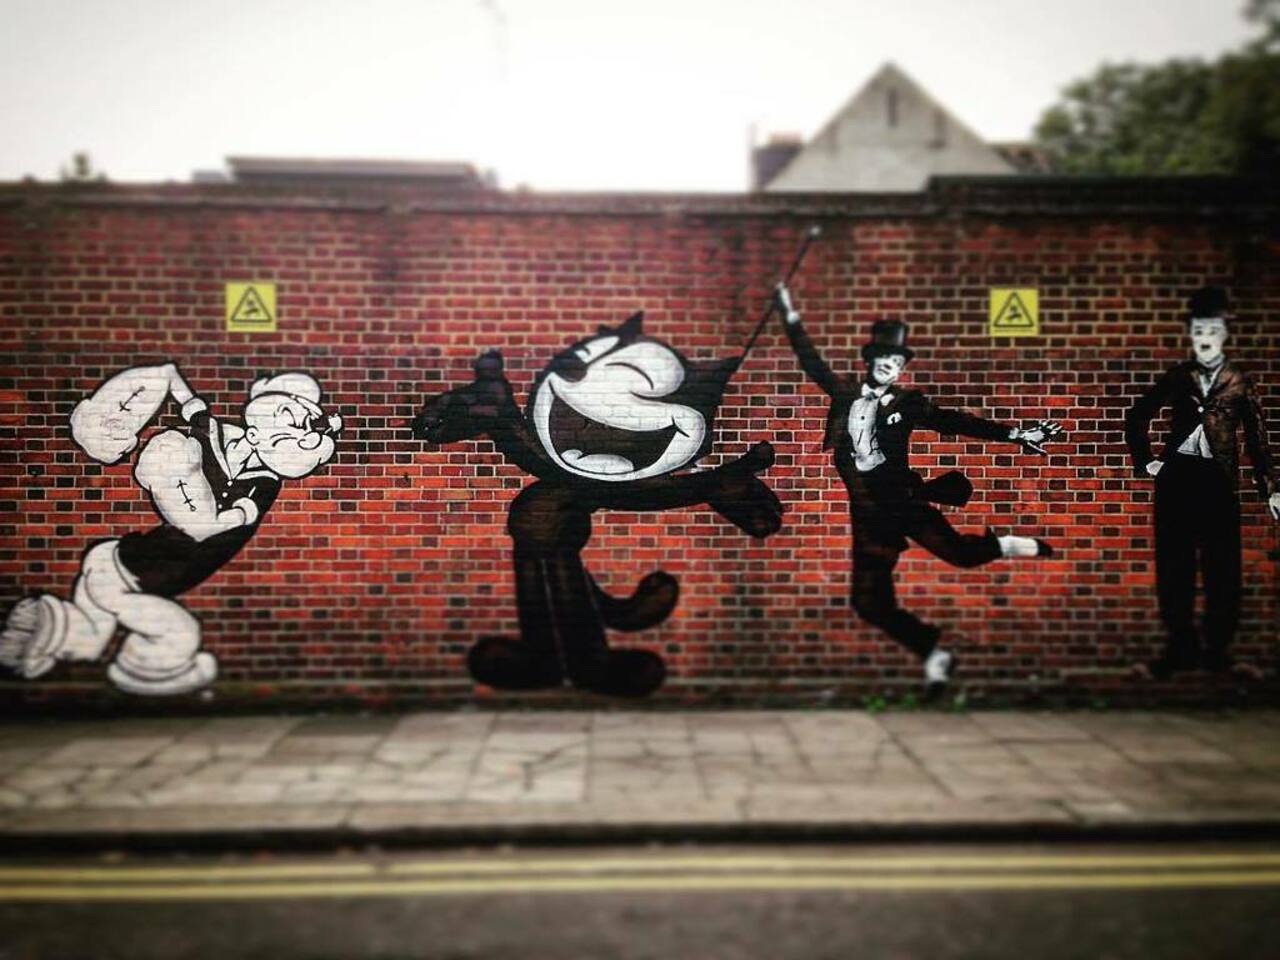 #StreetArt #London #Popeye #felixthecat #felix #fredastaire #charliechaplin #streetartlondon #graffitiart #Graffiti… http://t.co/Z7fZ2PAOkU